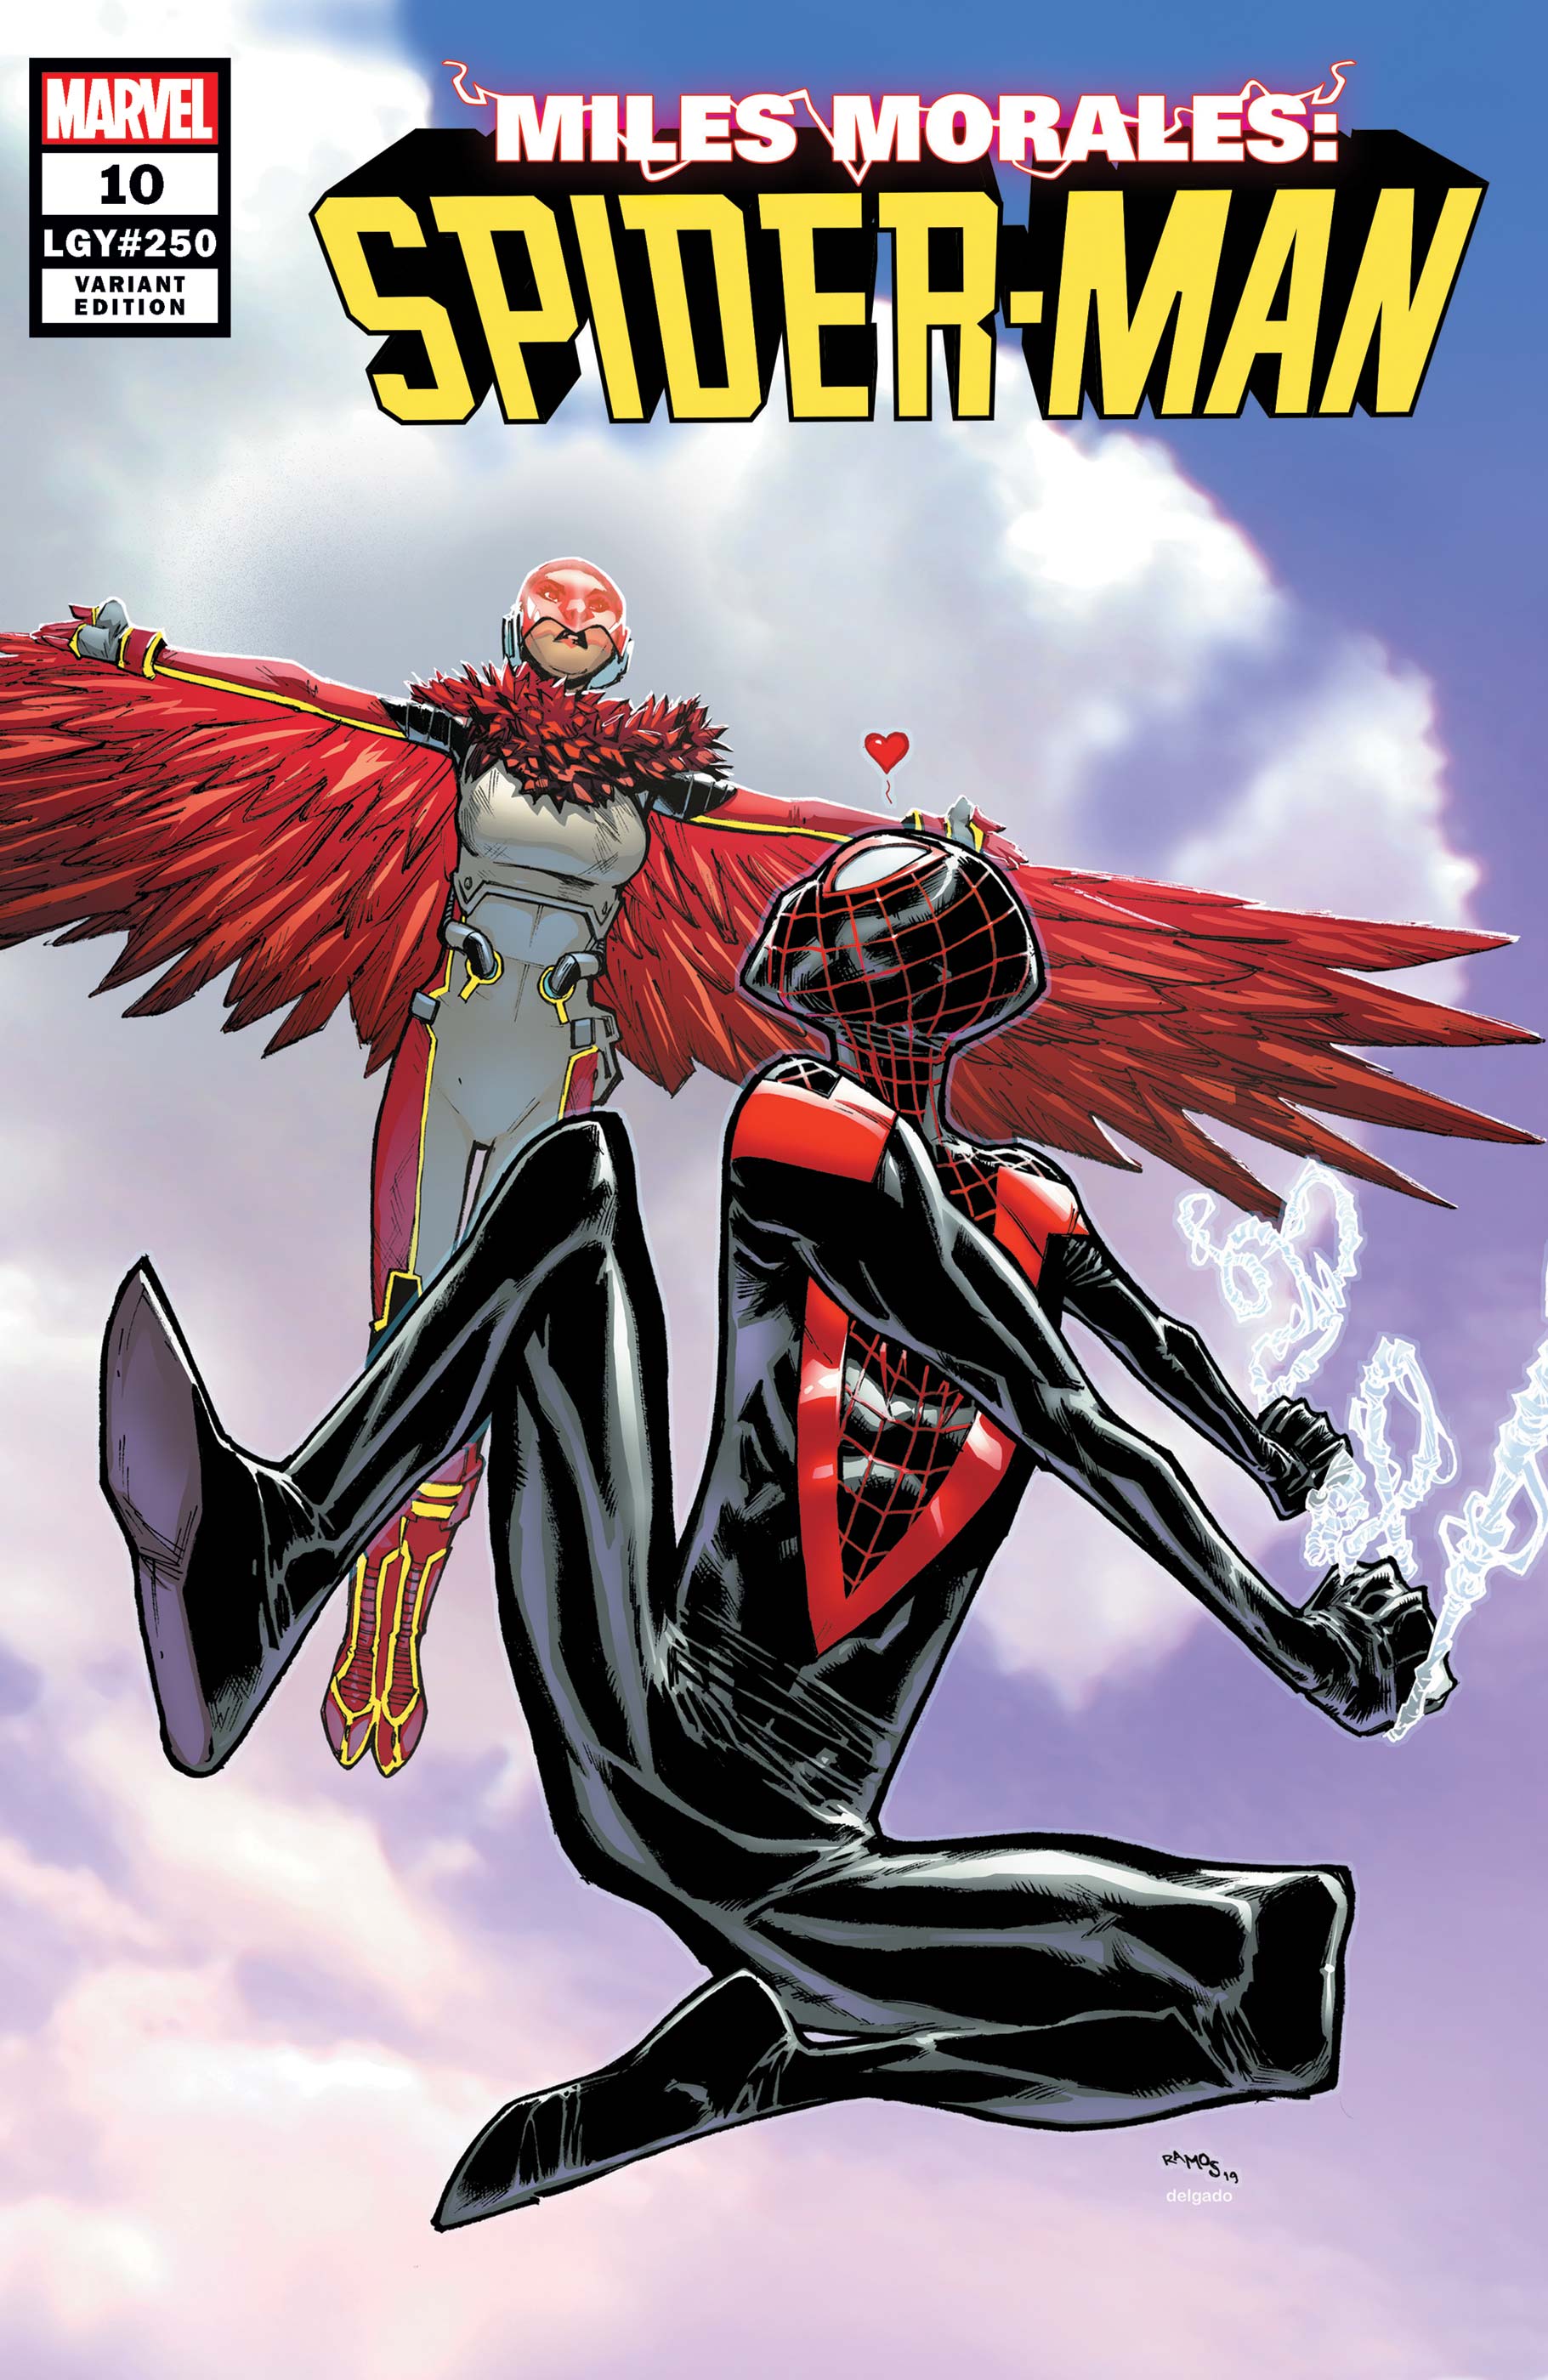 Miles Morales: Spider-Man Vol 1 10 | Marvel Database | Fandom